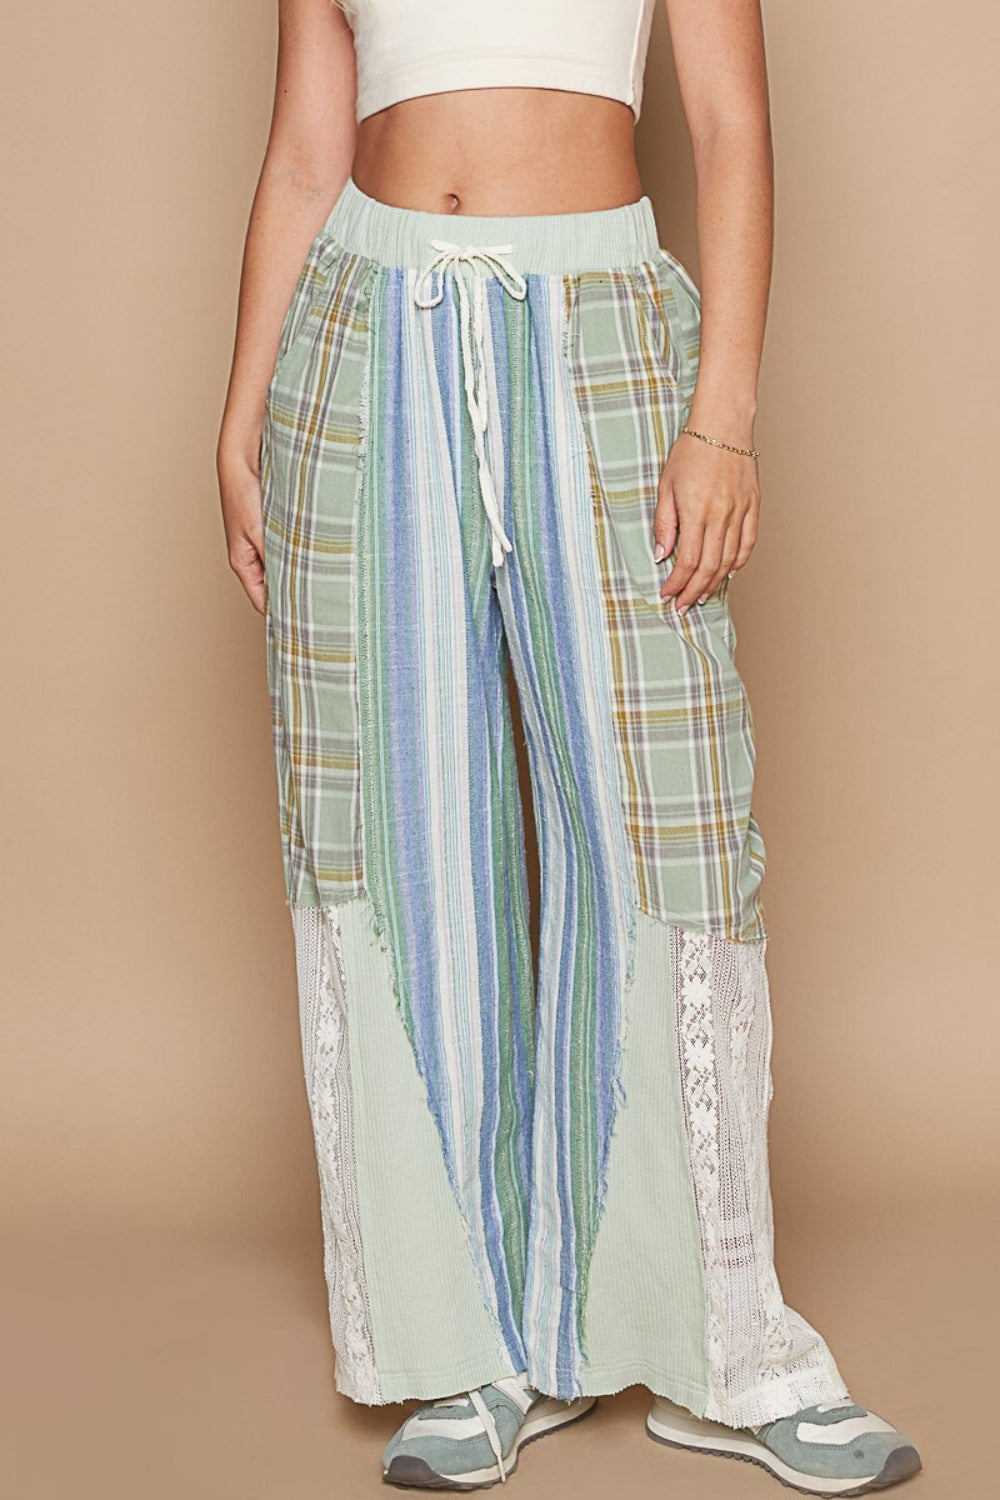 TEEK - Light Green Multi Drawstring Plaid Lace Straight Pants PANTS TEEK Trend S  